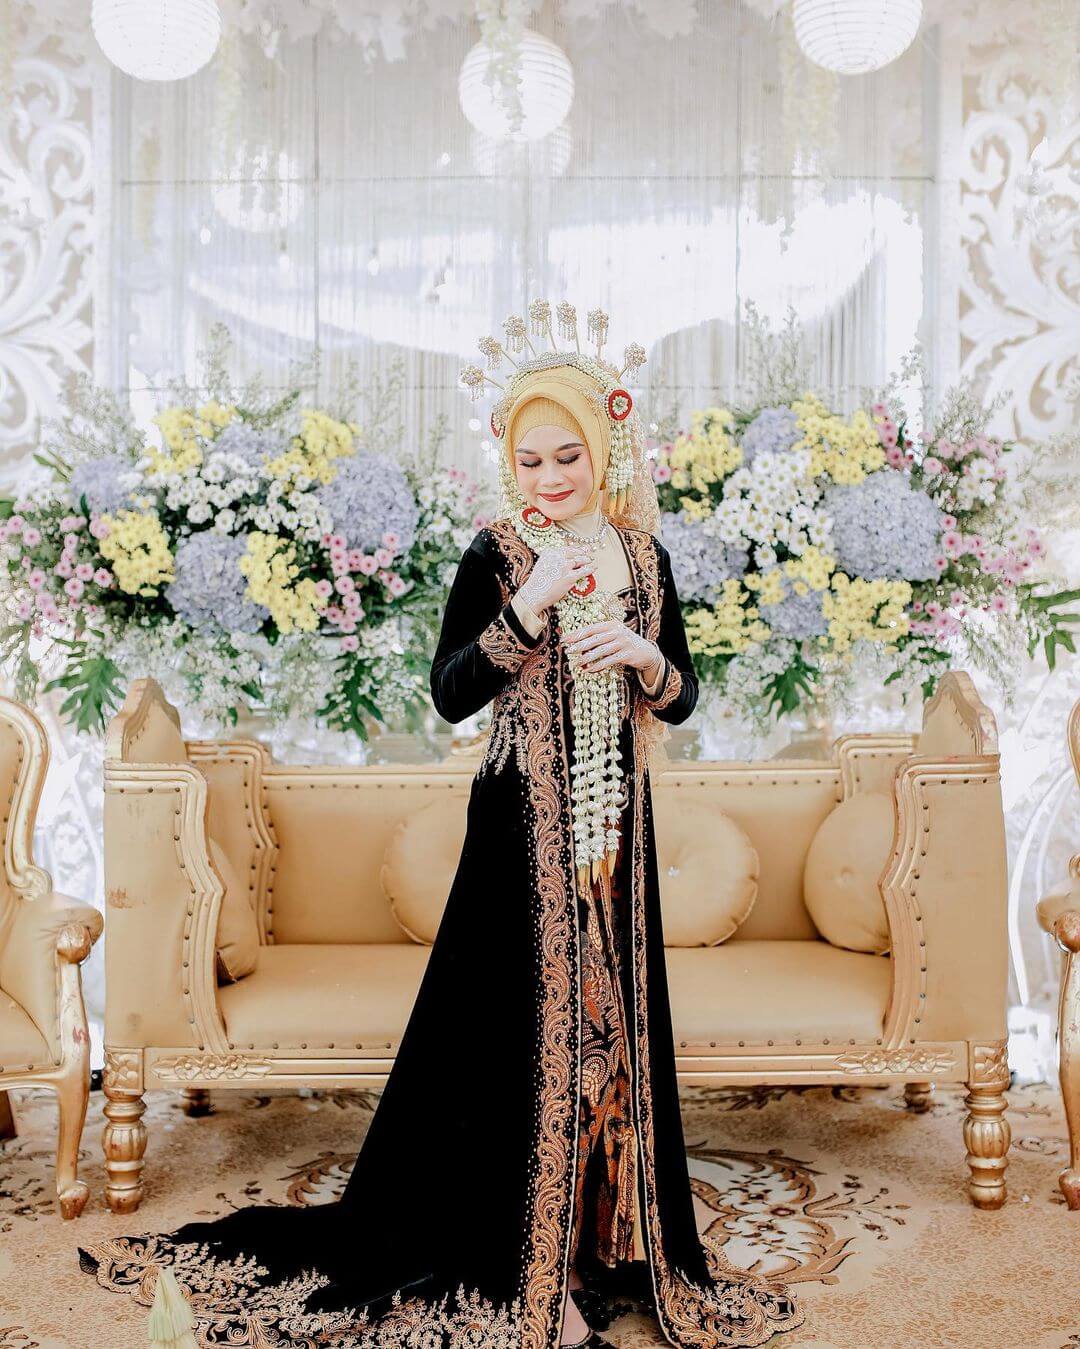 Some Modern and Fashionable Hijab Wedding Dress Ideas 2021 Black Hijab Wedding Dress With Golden Border